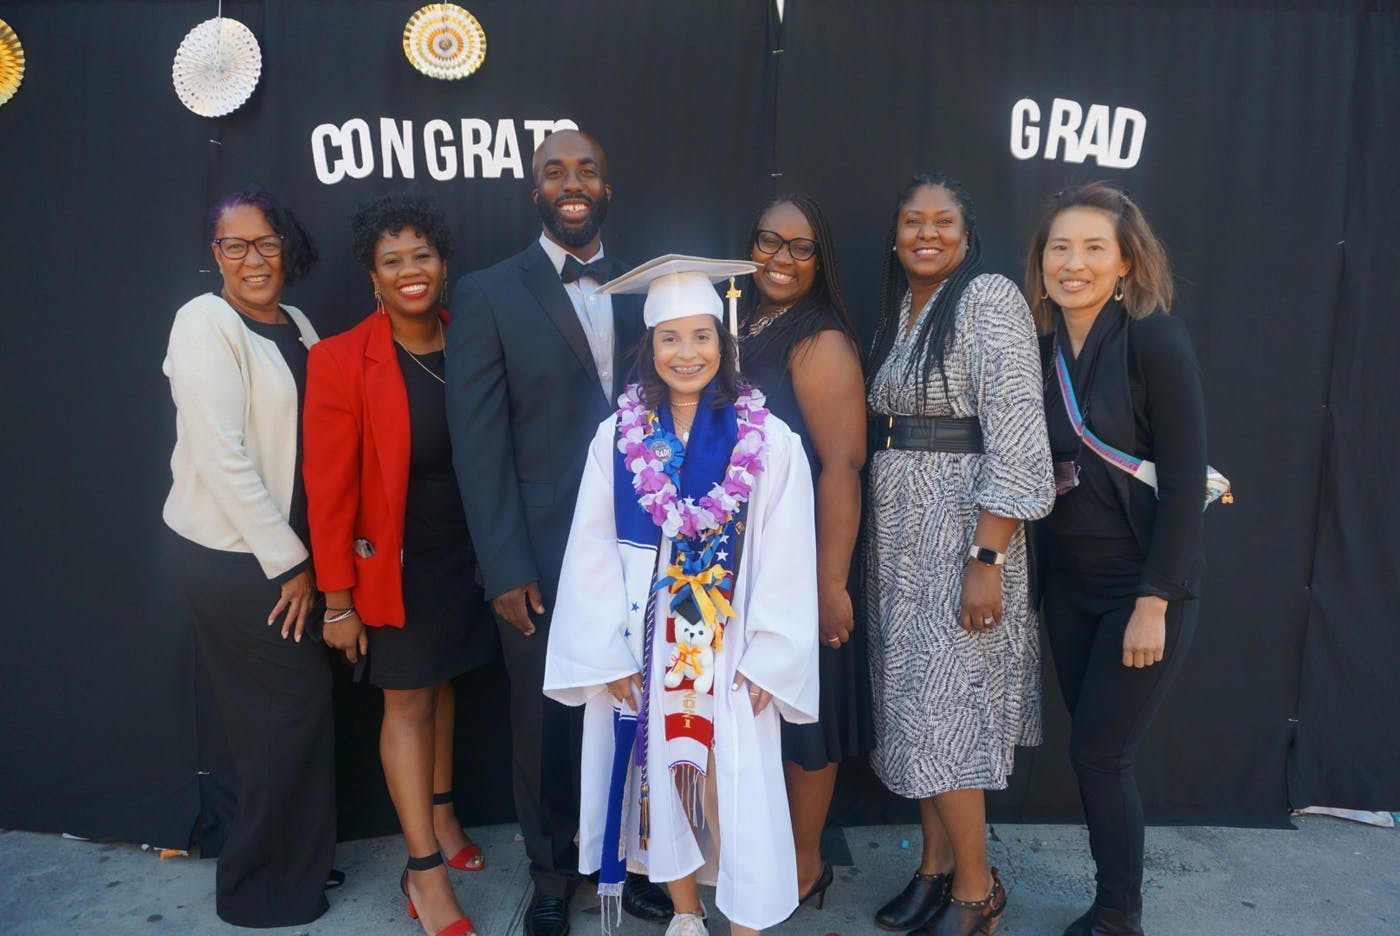 Principal Orlando Johnson with graduating student and staff